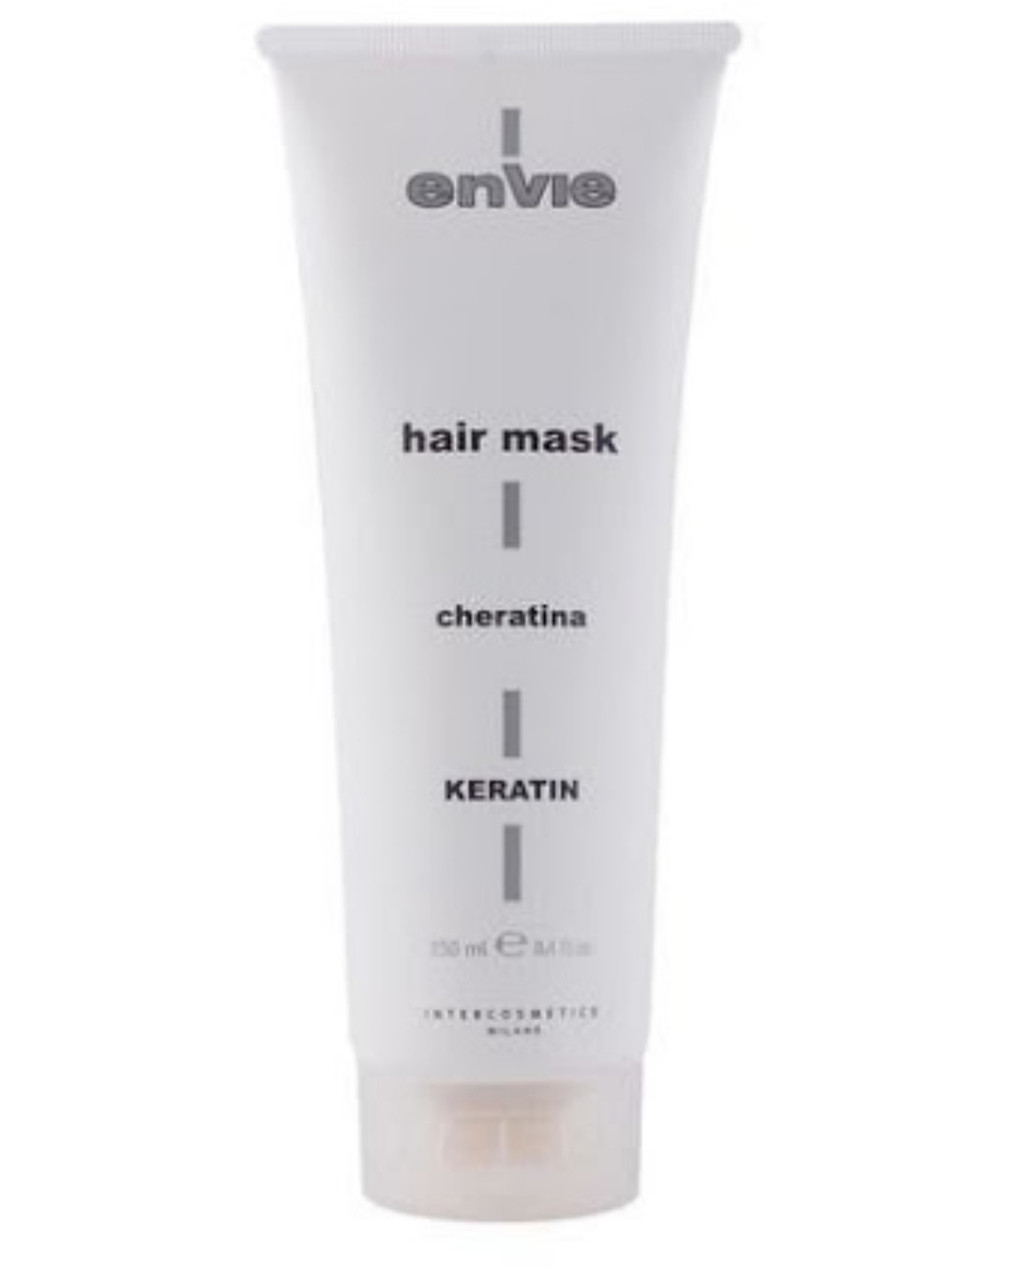 Маска для волос Envie Keratin (250мл) с гидрализованым кератином, цена 329  грн. - Prom.ua (ID#1347136262)